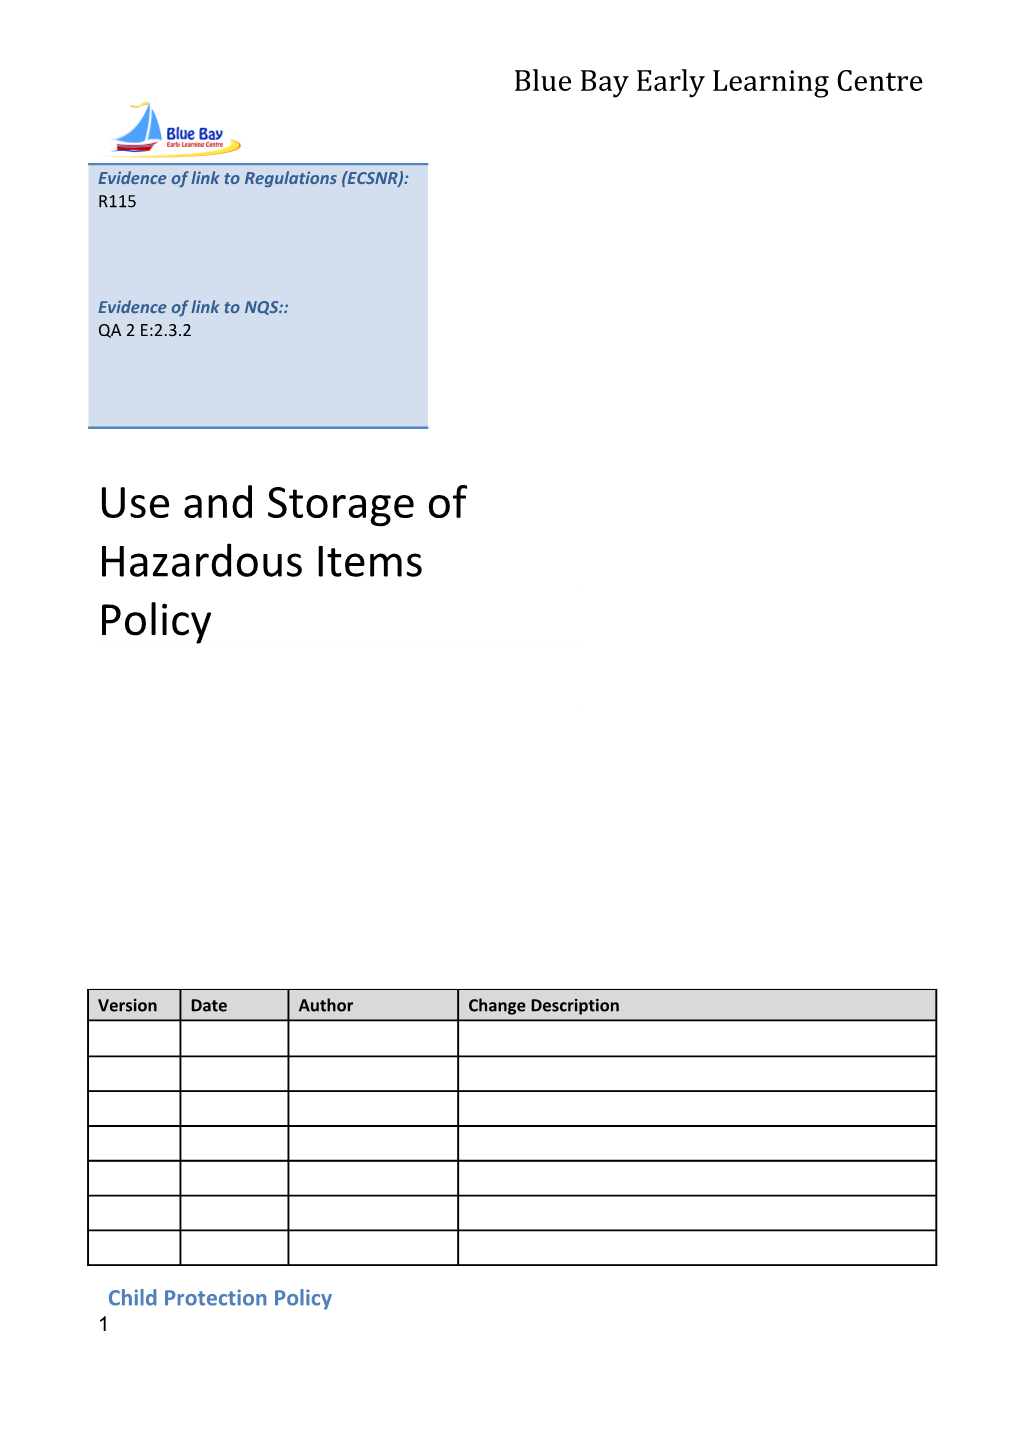 Use and Storage of Hazardous Items